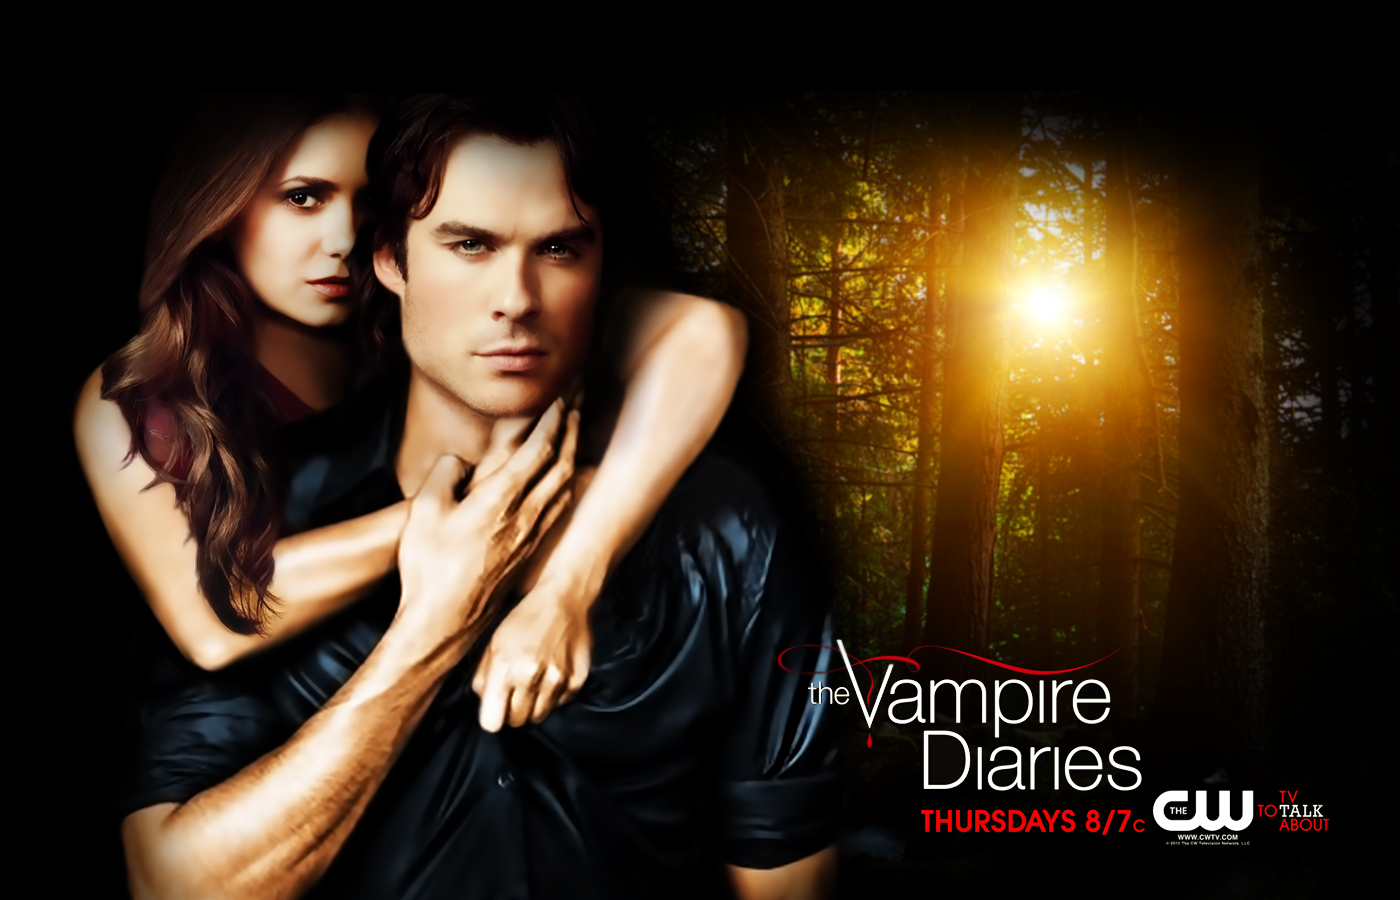 The Vampire Diaries season 4 cast portraits